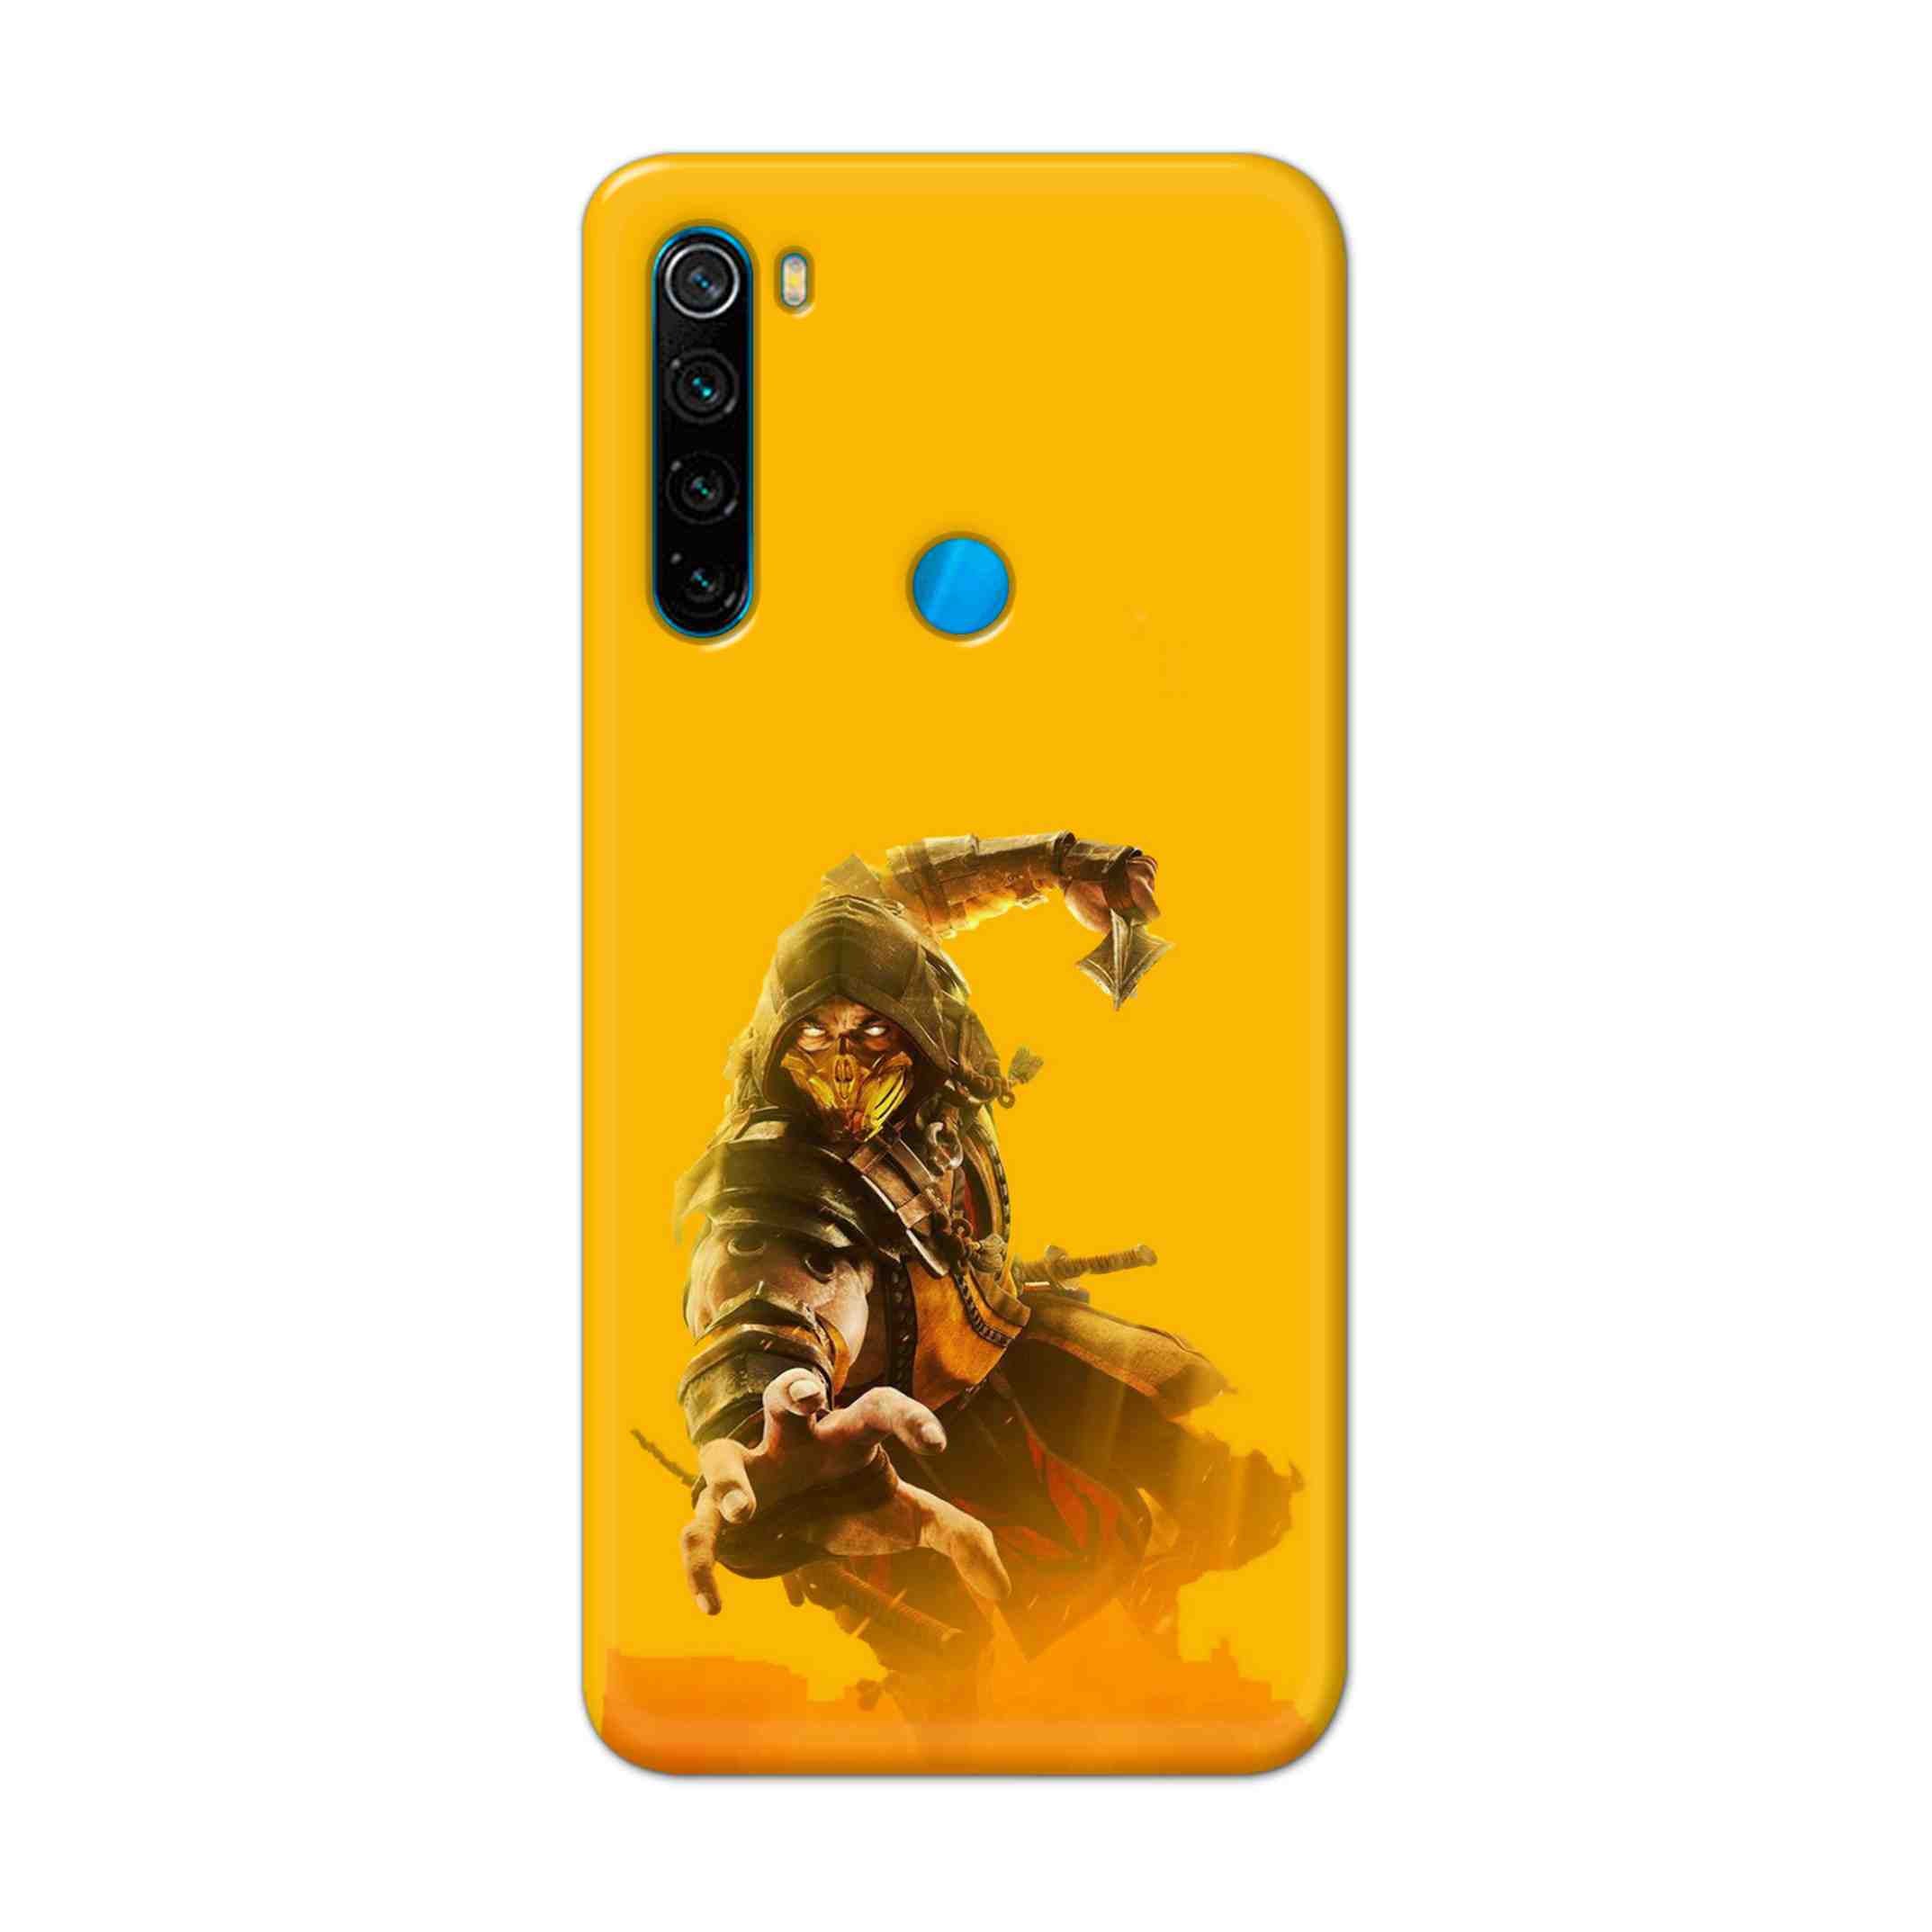 Buy Mortal Kombat Hard Back Mobile Phone Case Cover For Xiaomi Redmi Note 8 Online